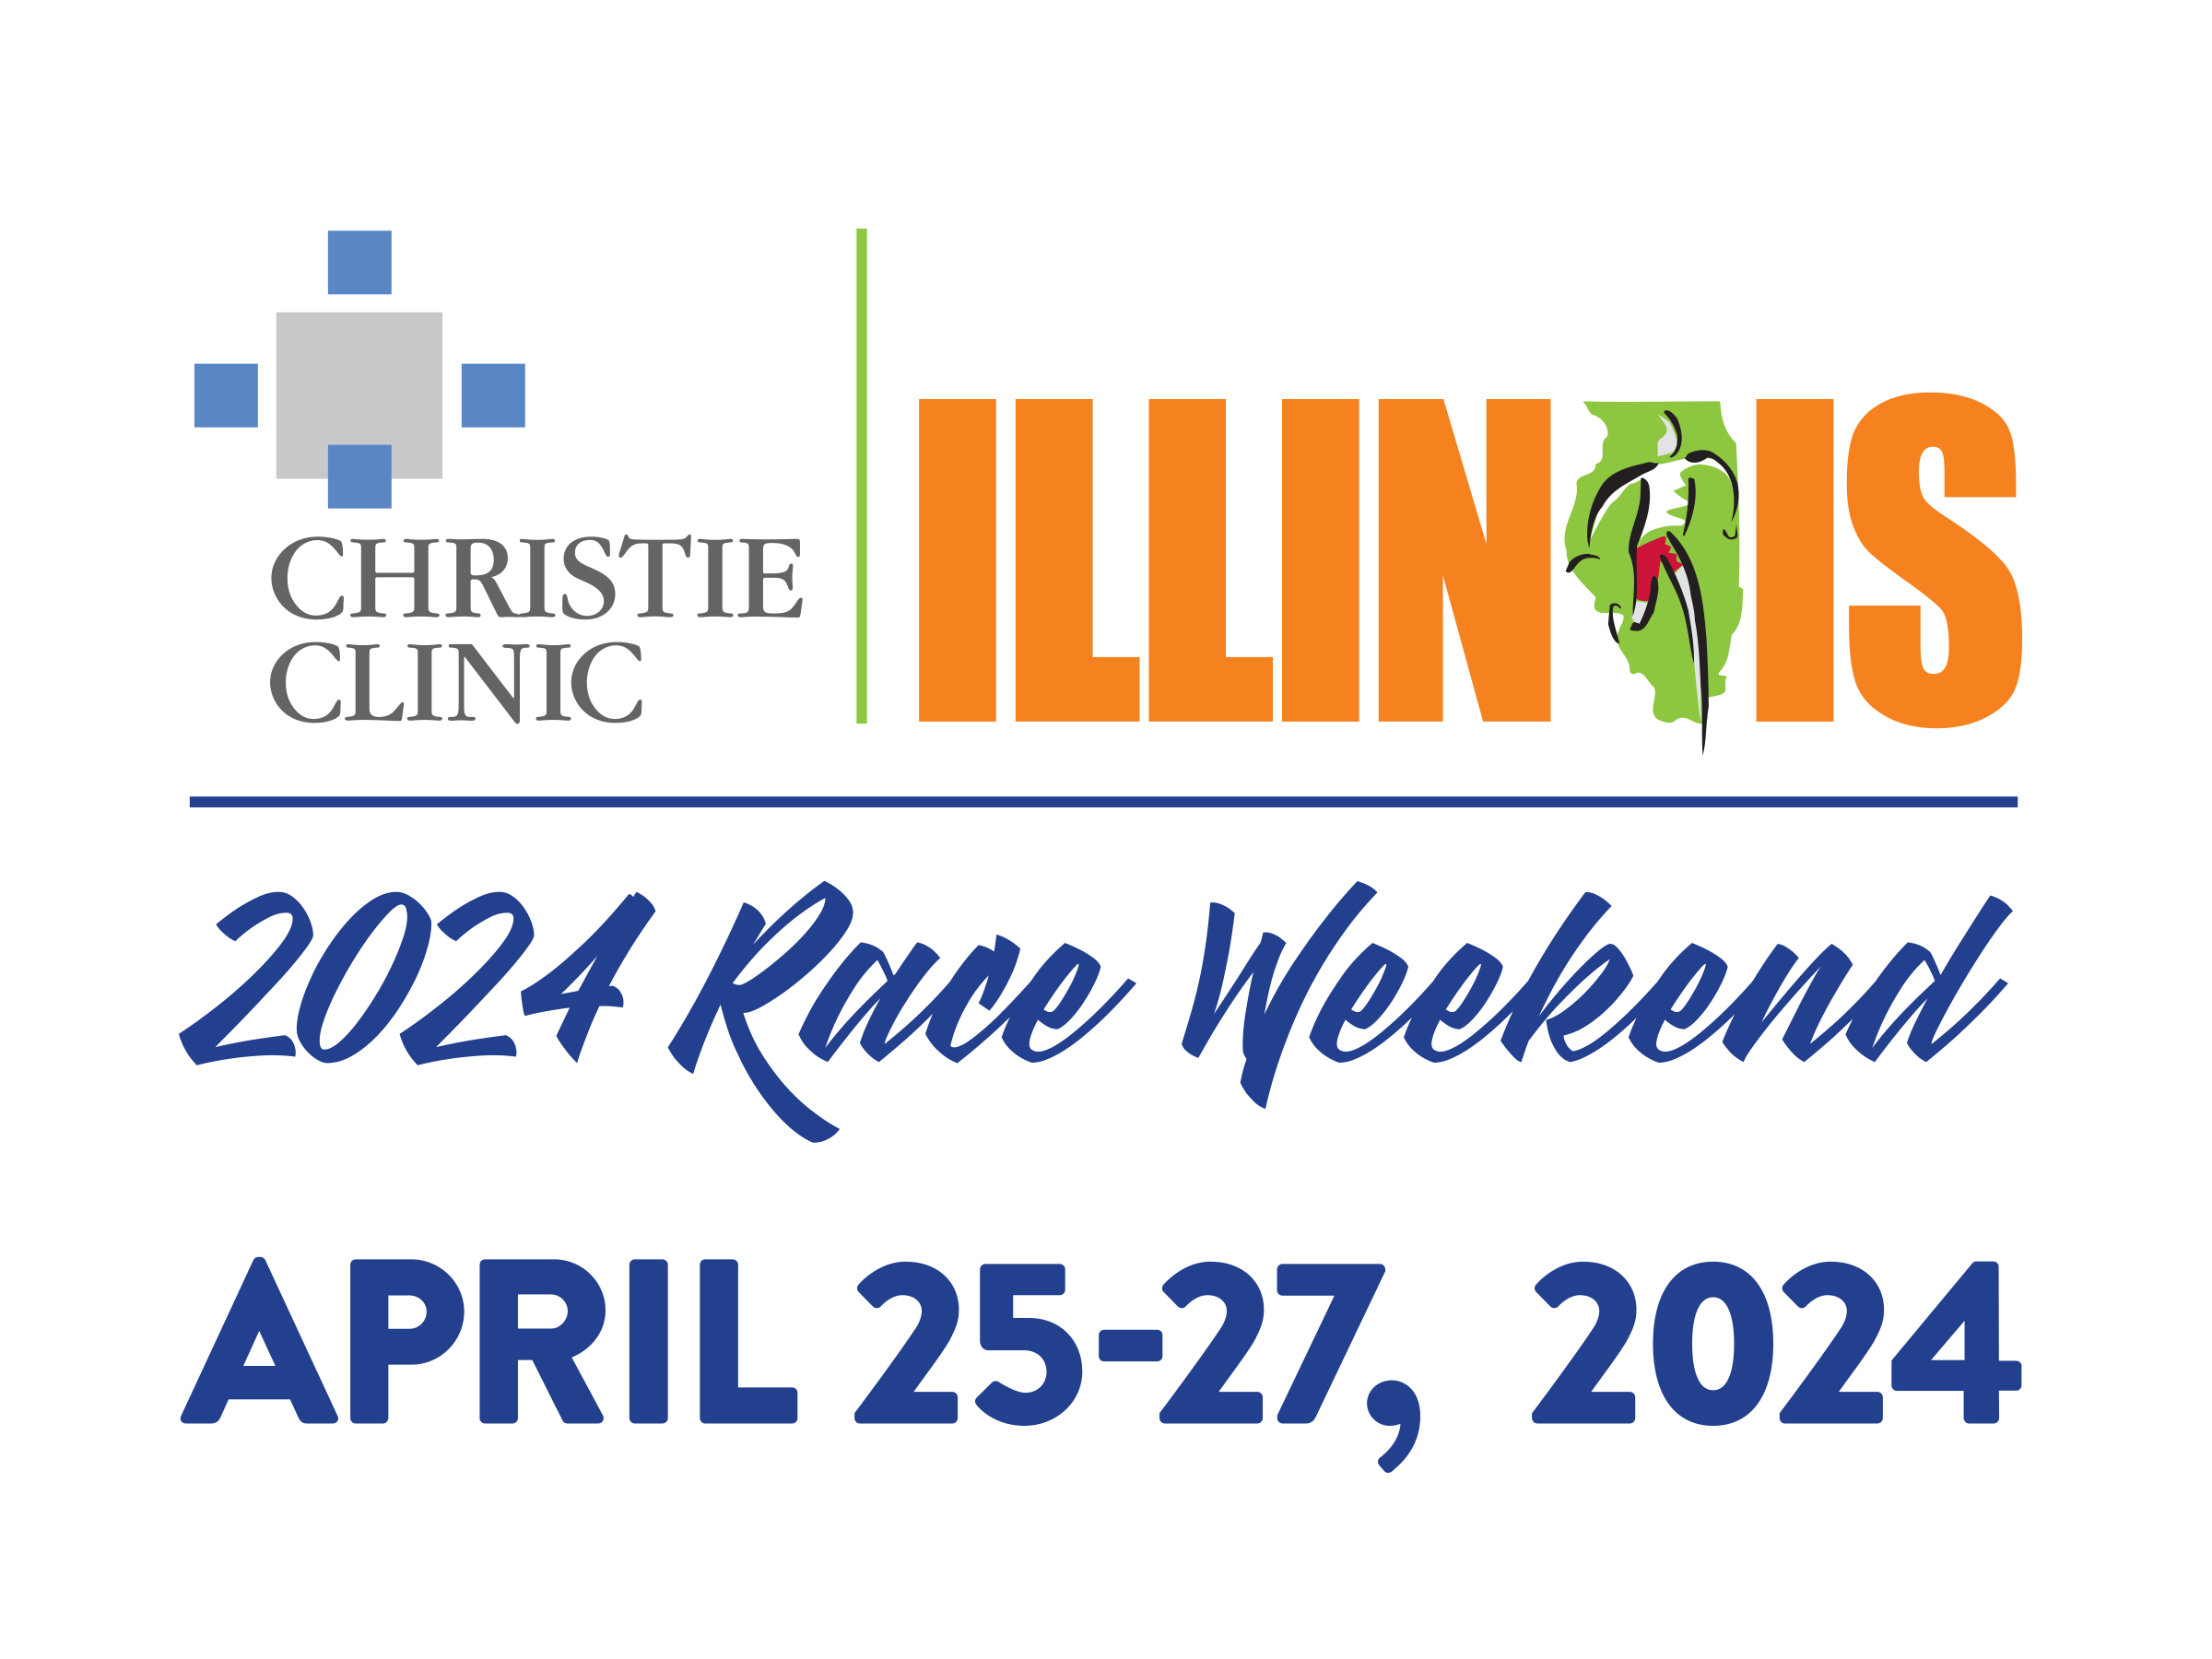 2024 CC Illinois Race Weekend April 25-27 2024